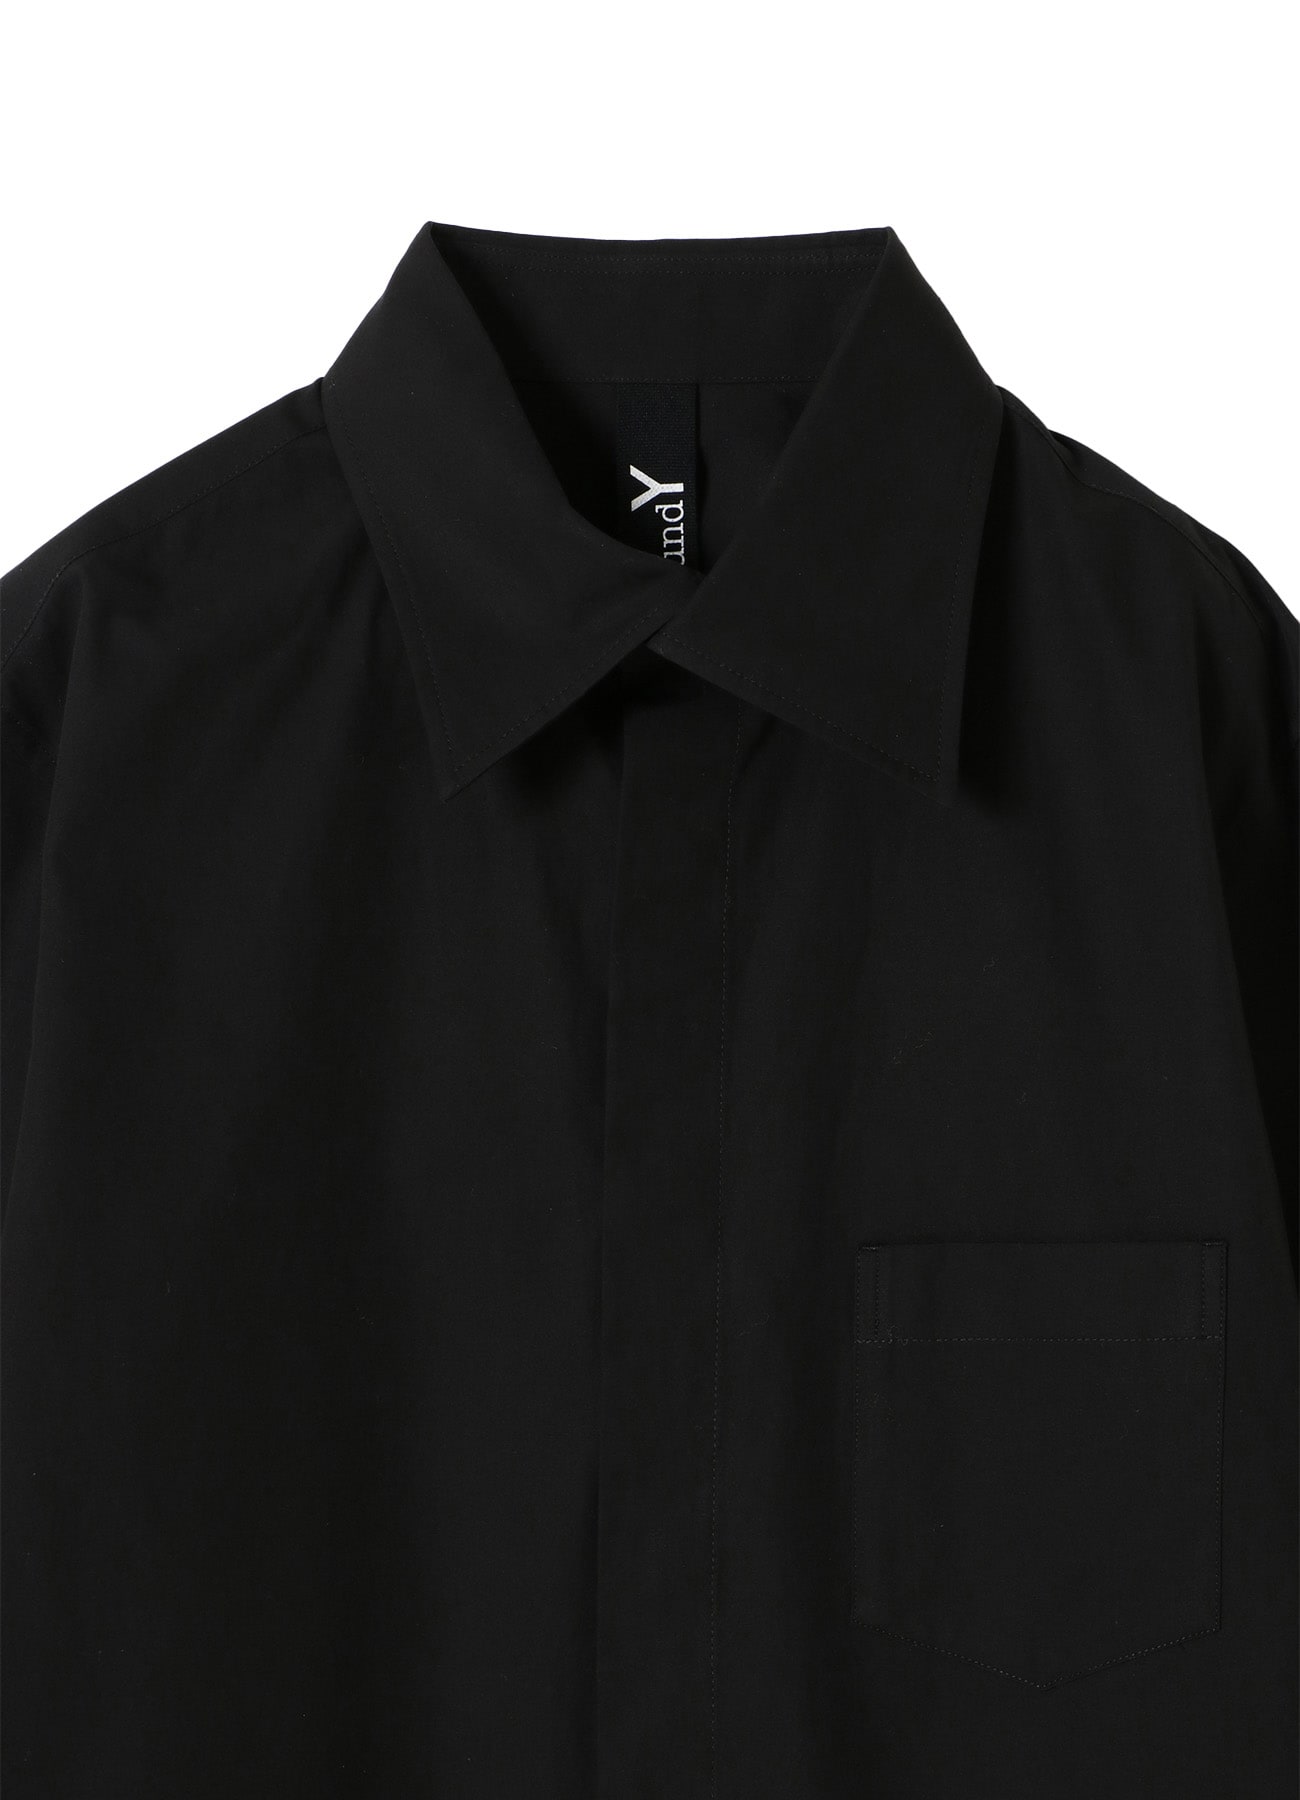 100/2 cotton broad Crossed collar shirt